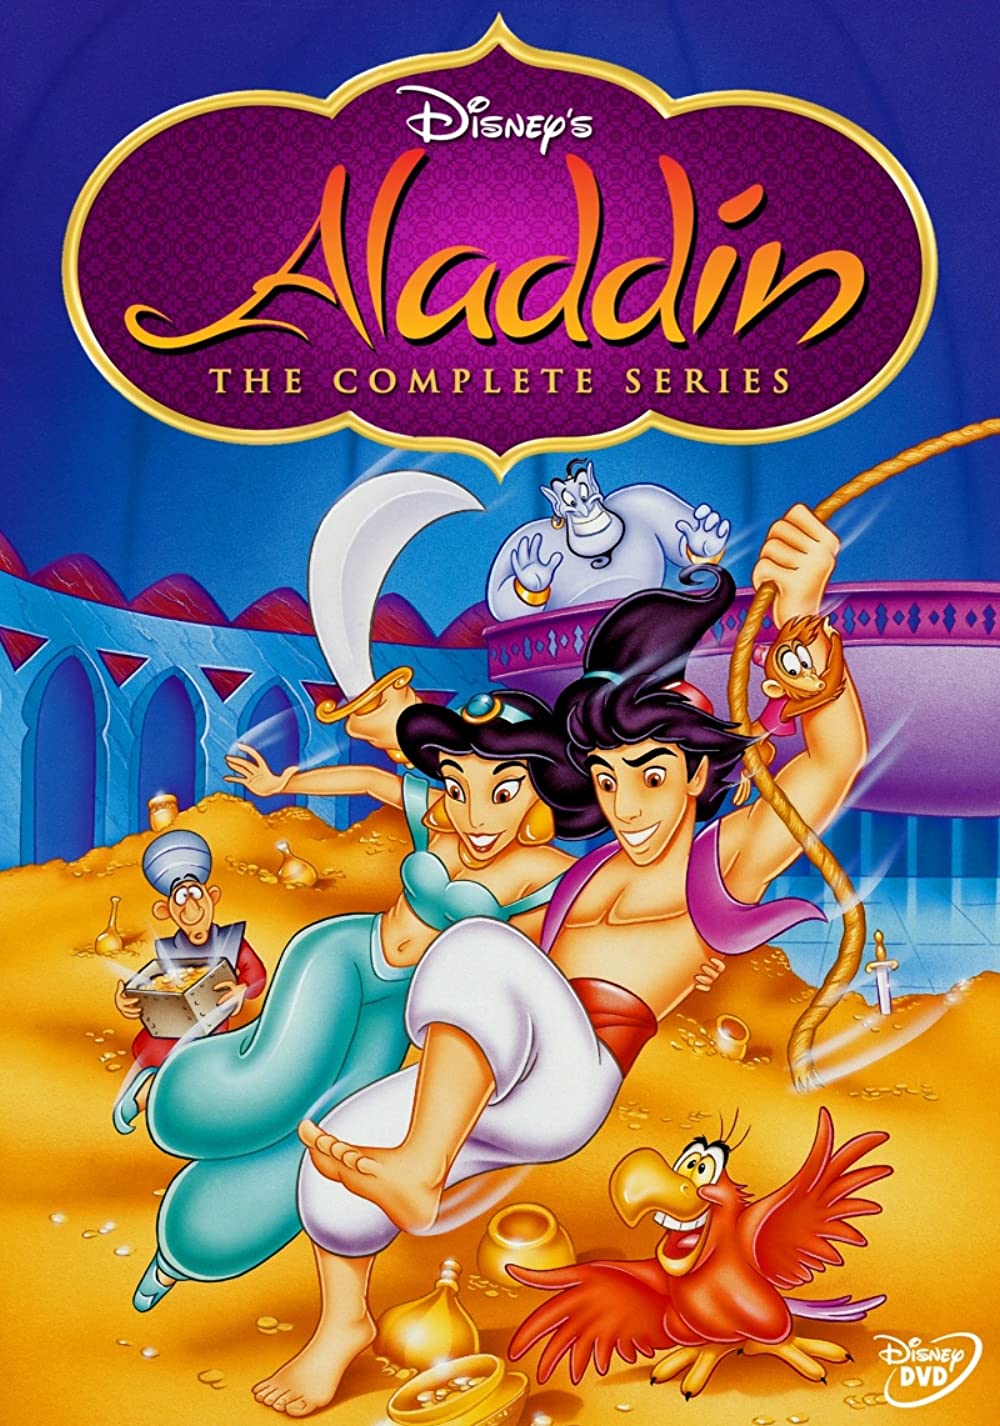 aladdin-90s-cartoons - Pop Culture, Entertainment, Humor, Travel & More